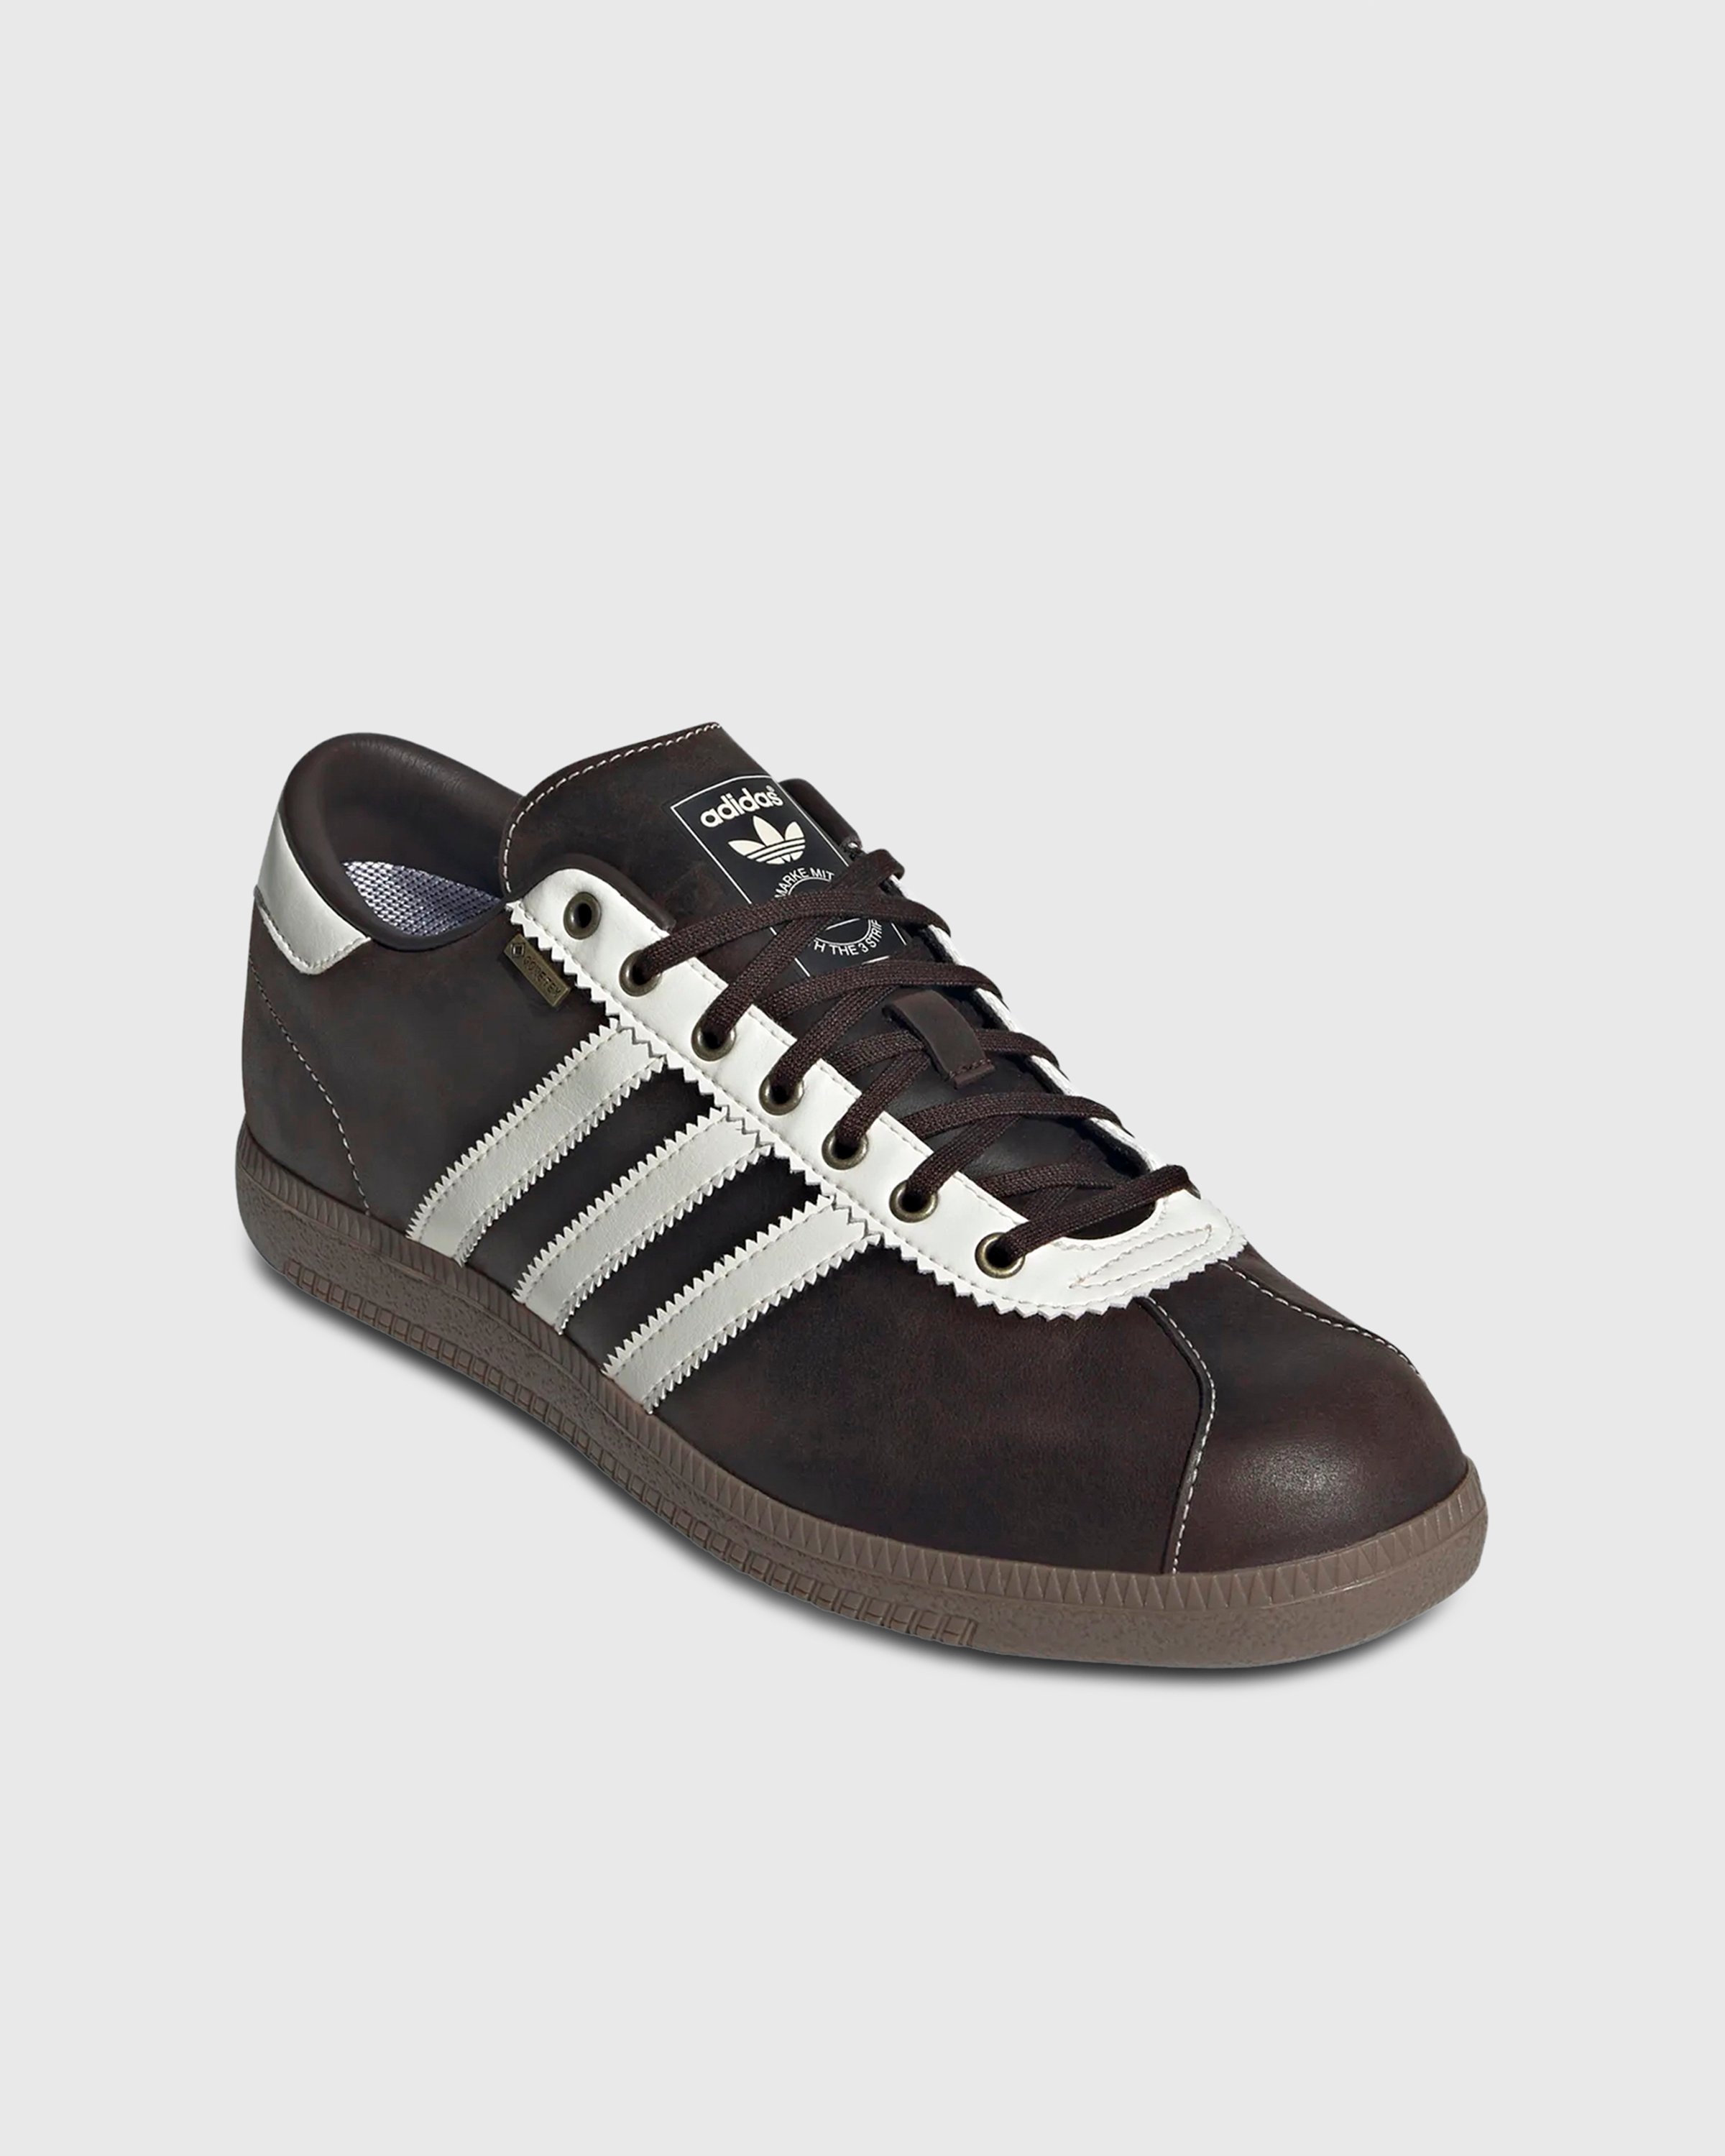 Adidas - BERN GTX            DBROWN/CREWHT/WONWHI - Footwear - Brown - Image 3